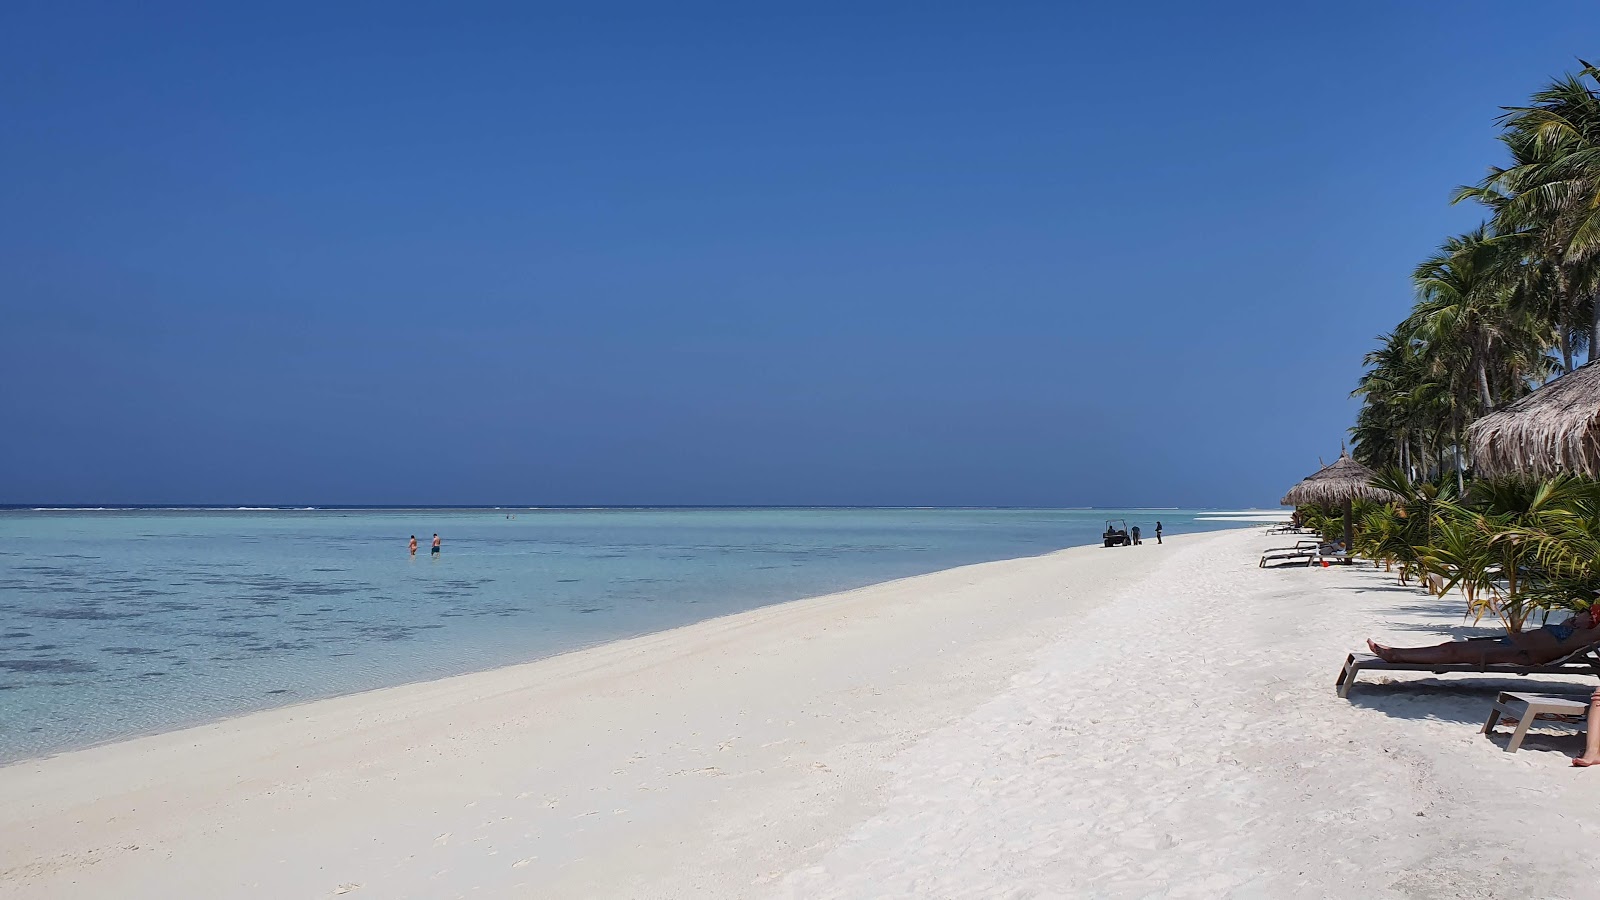 Foto di Riu Resort Beach con una superficie del sabbia pura bianca